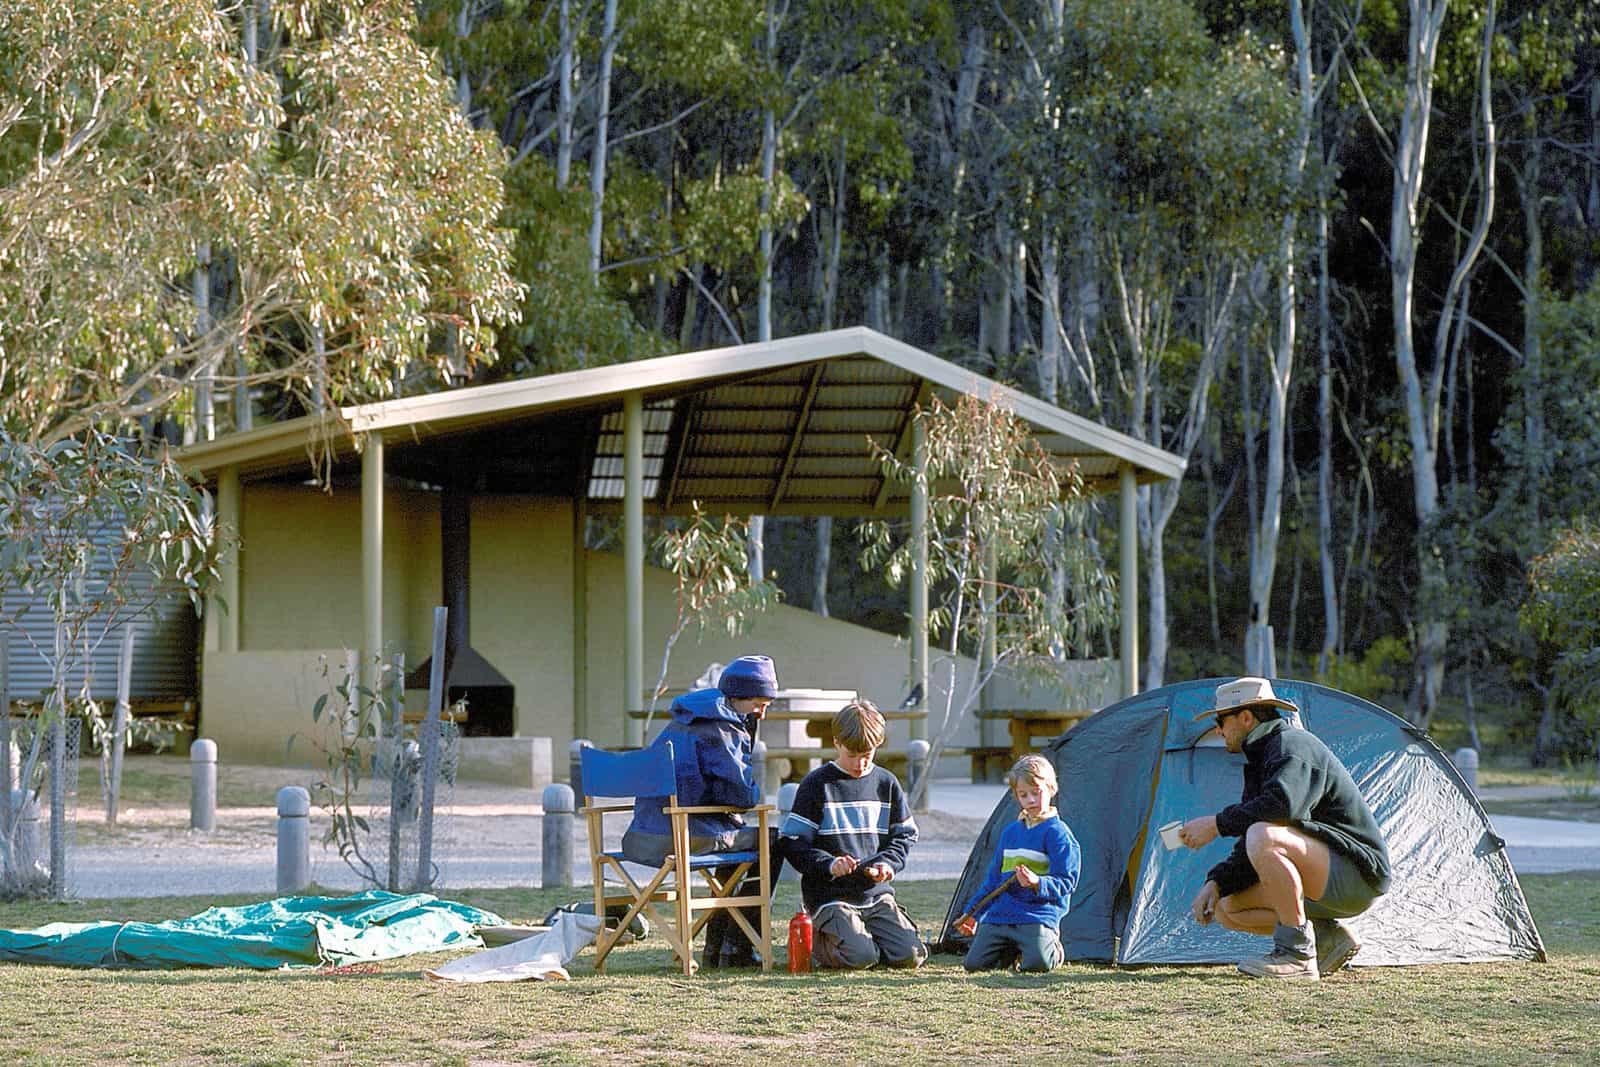 Camping at Honeysuckle Campground